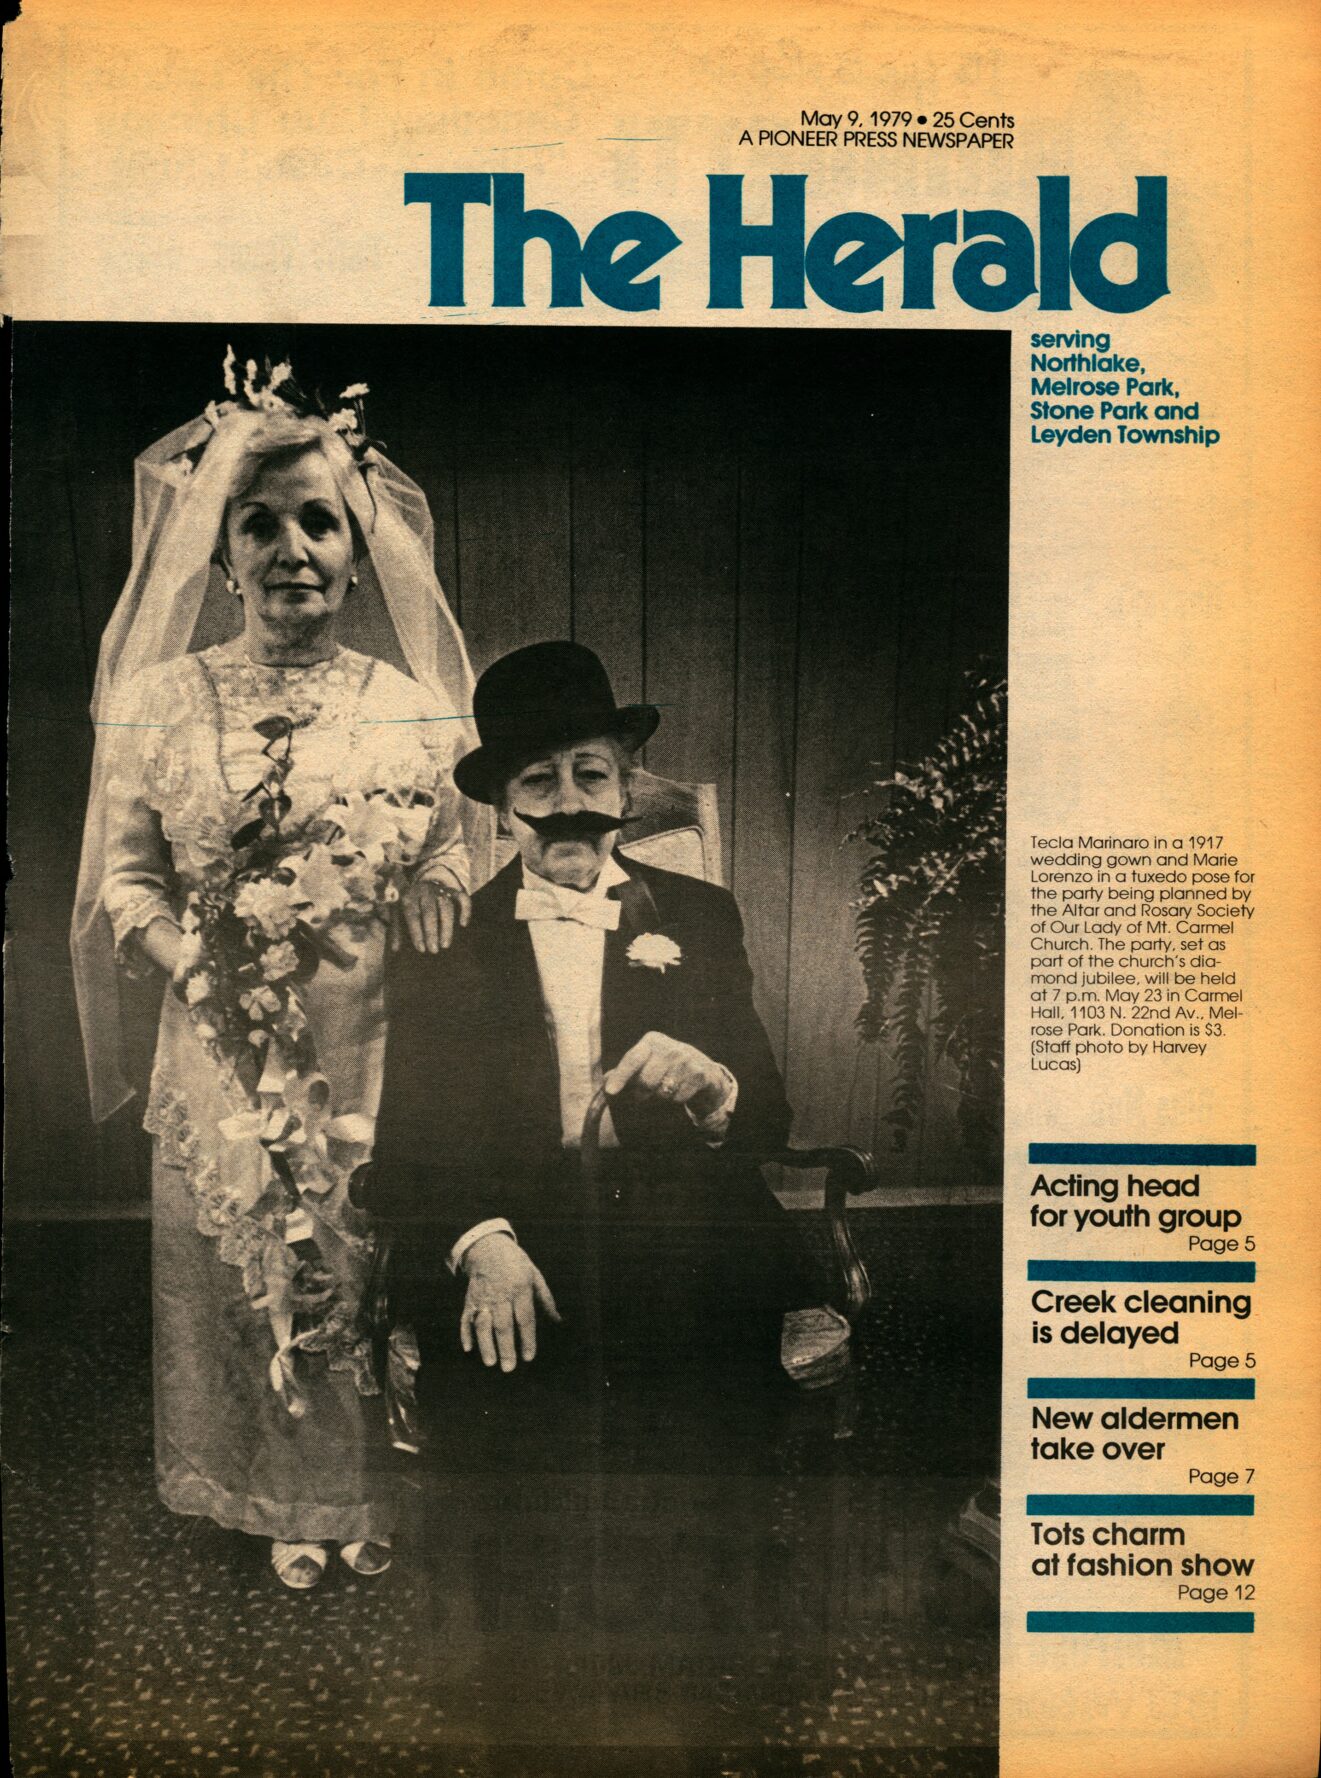 The Herald – 19790509